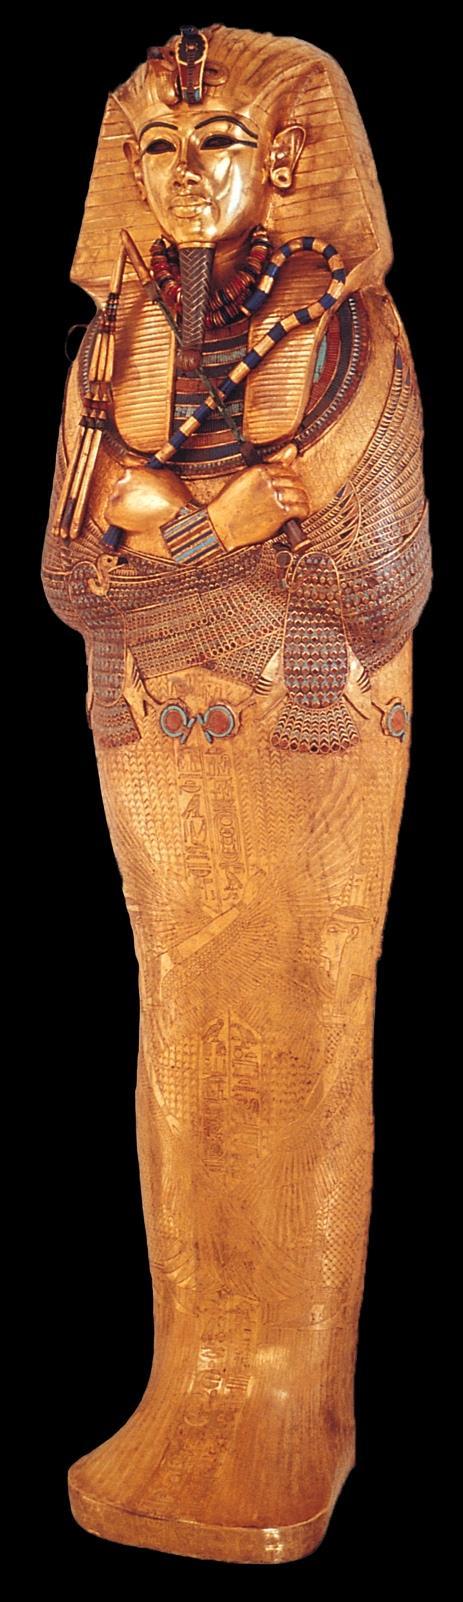 Post Amarna New Kingdom Tutankhamun as a harpooner.